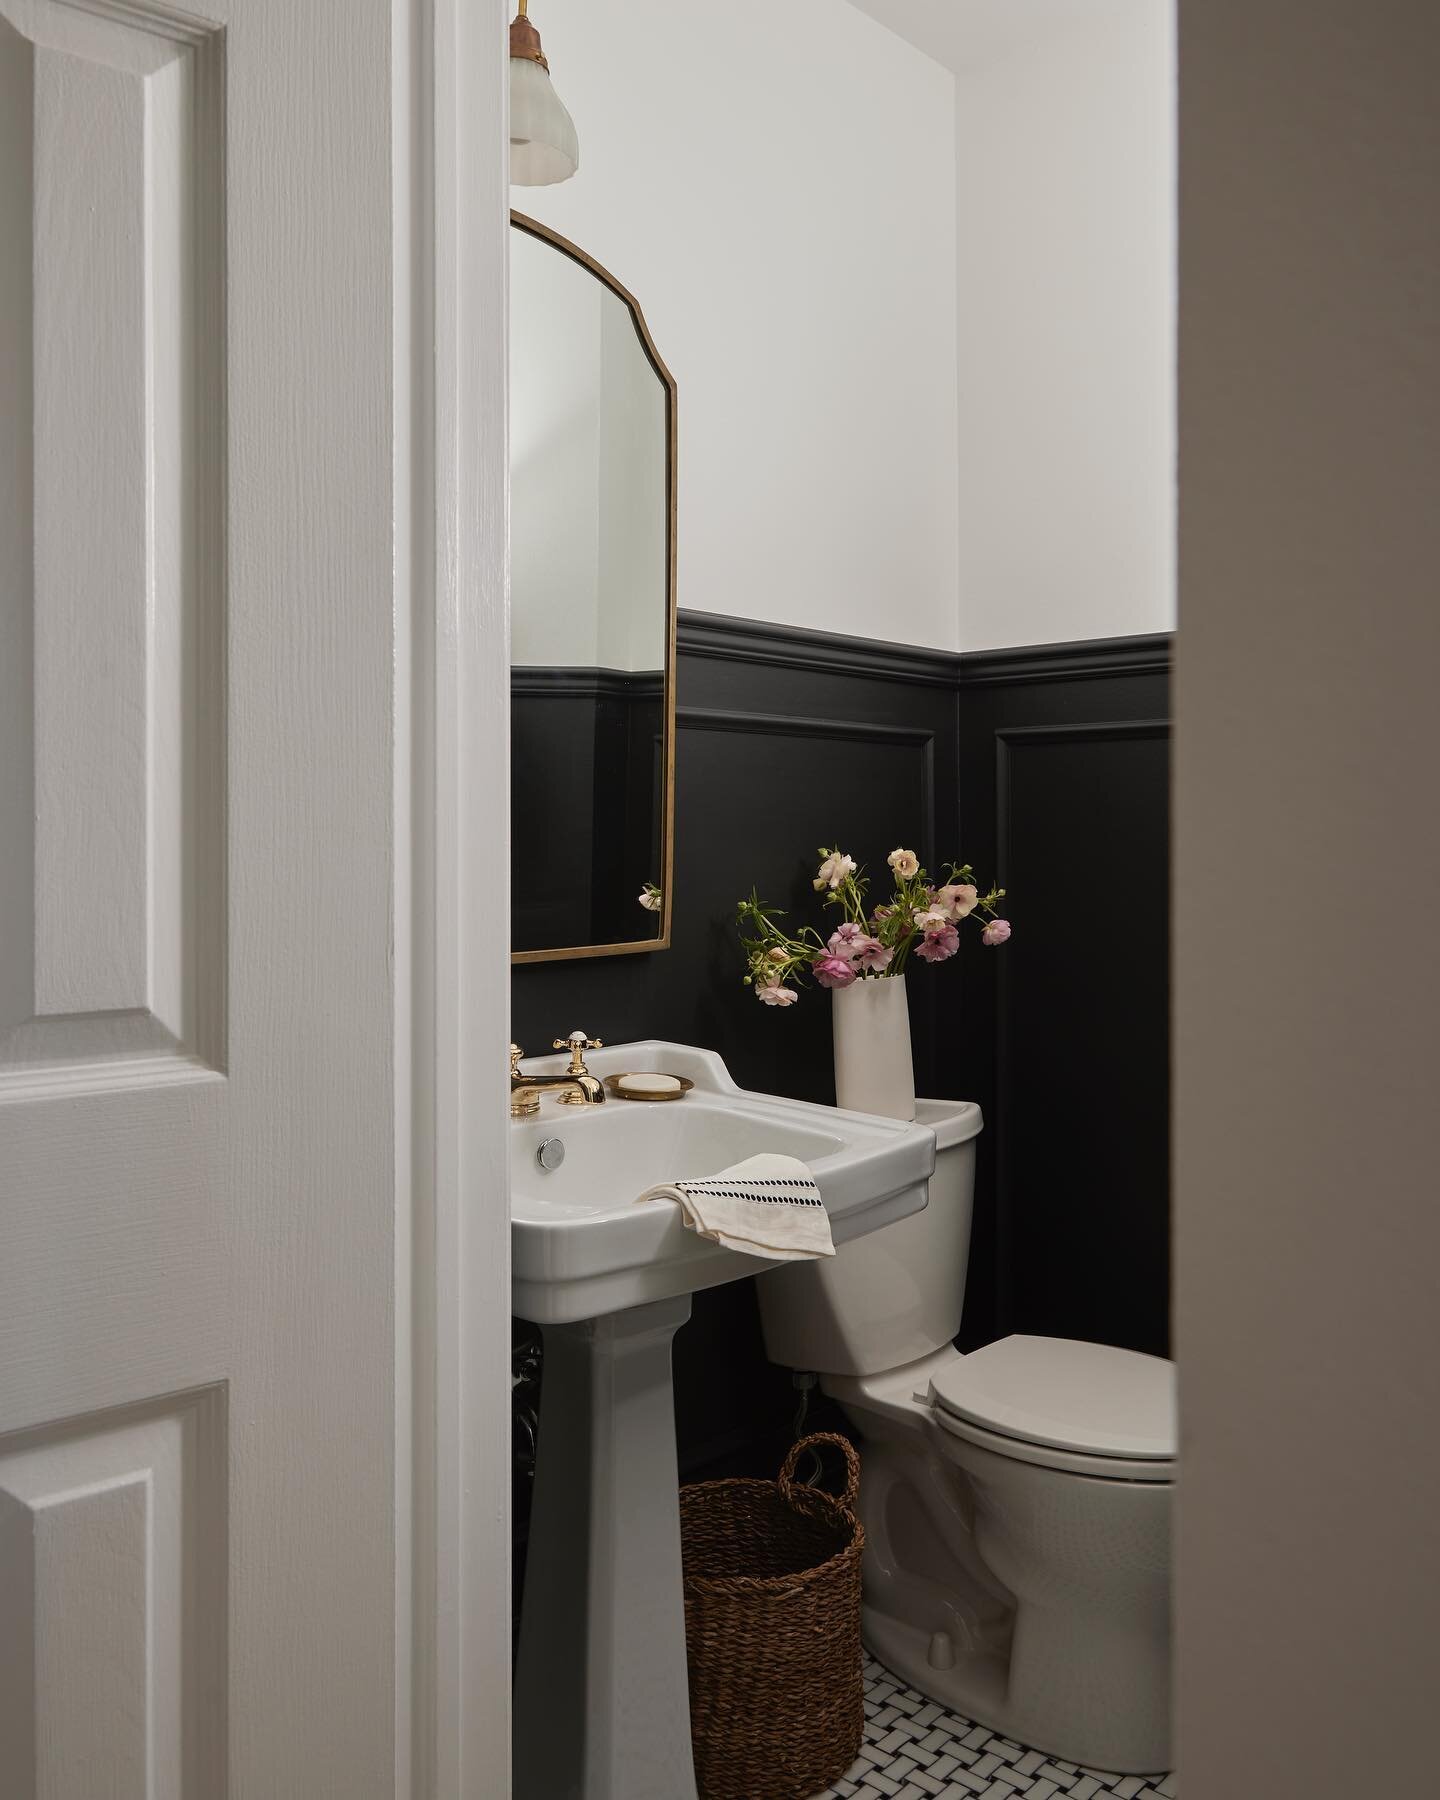 all for some contrast in the most charming powder room. 

design @jpzinteriors 
photo @lomillerphoto 
styling @_meandmo_ 

#powderroom #interior #interiordesign #bathroomdesign #elledecor #elledecoration #vogueliving #home